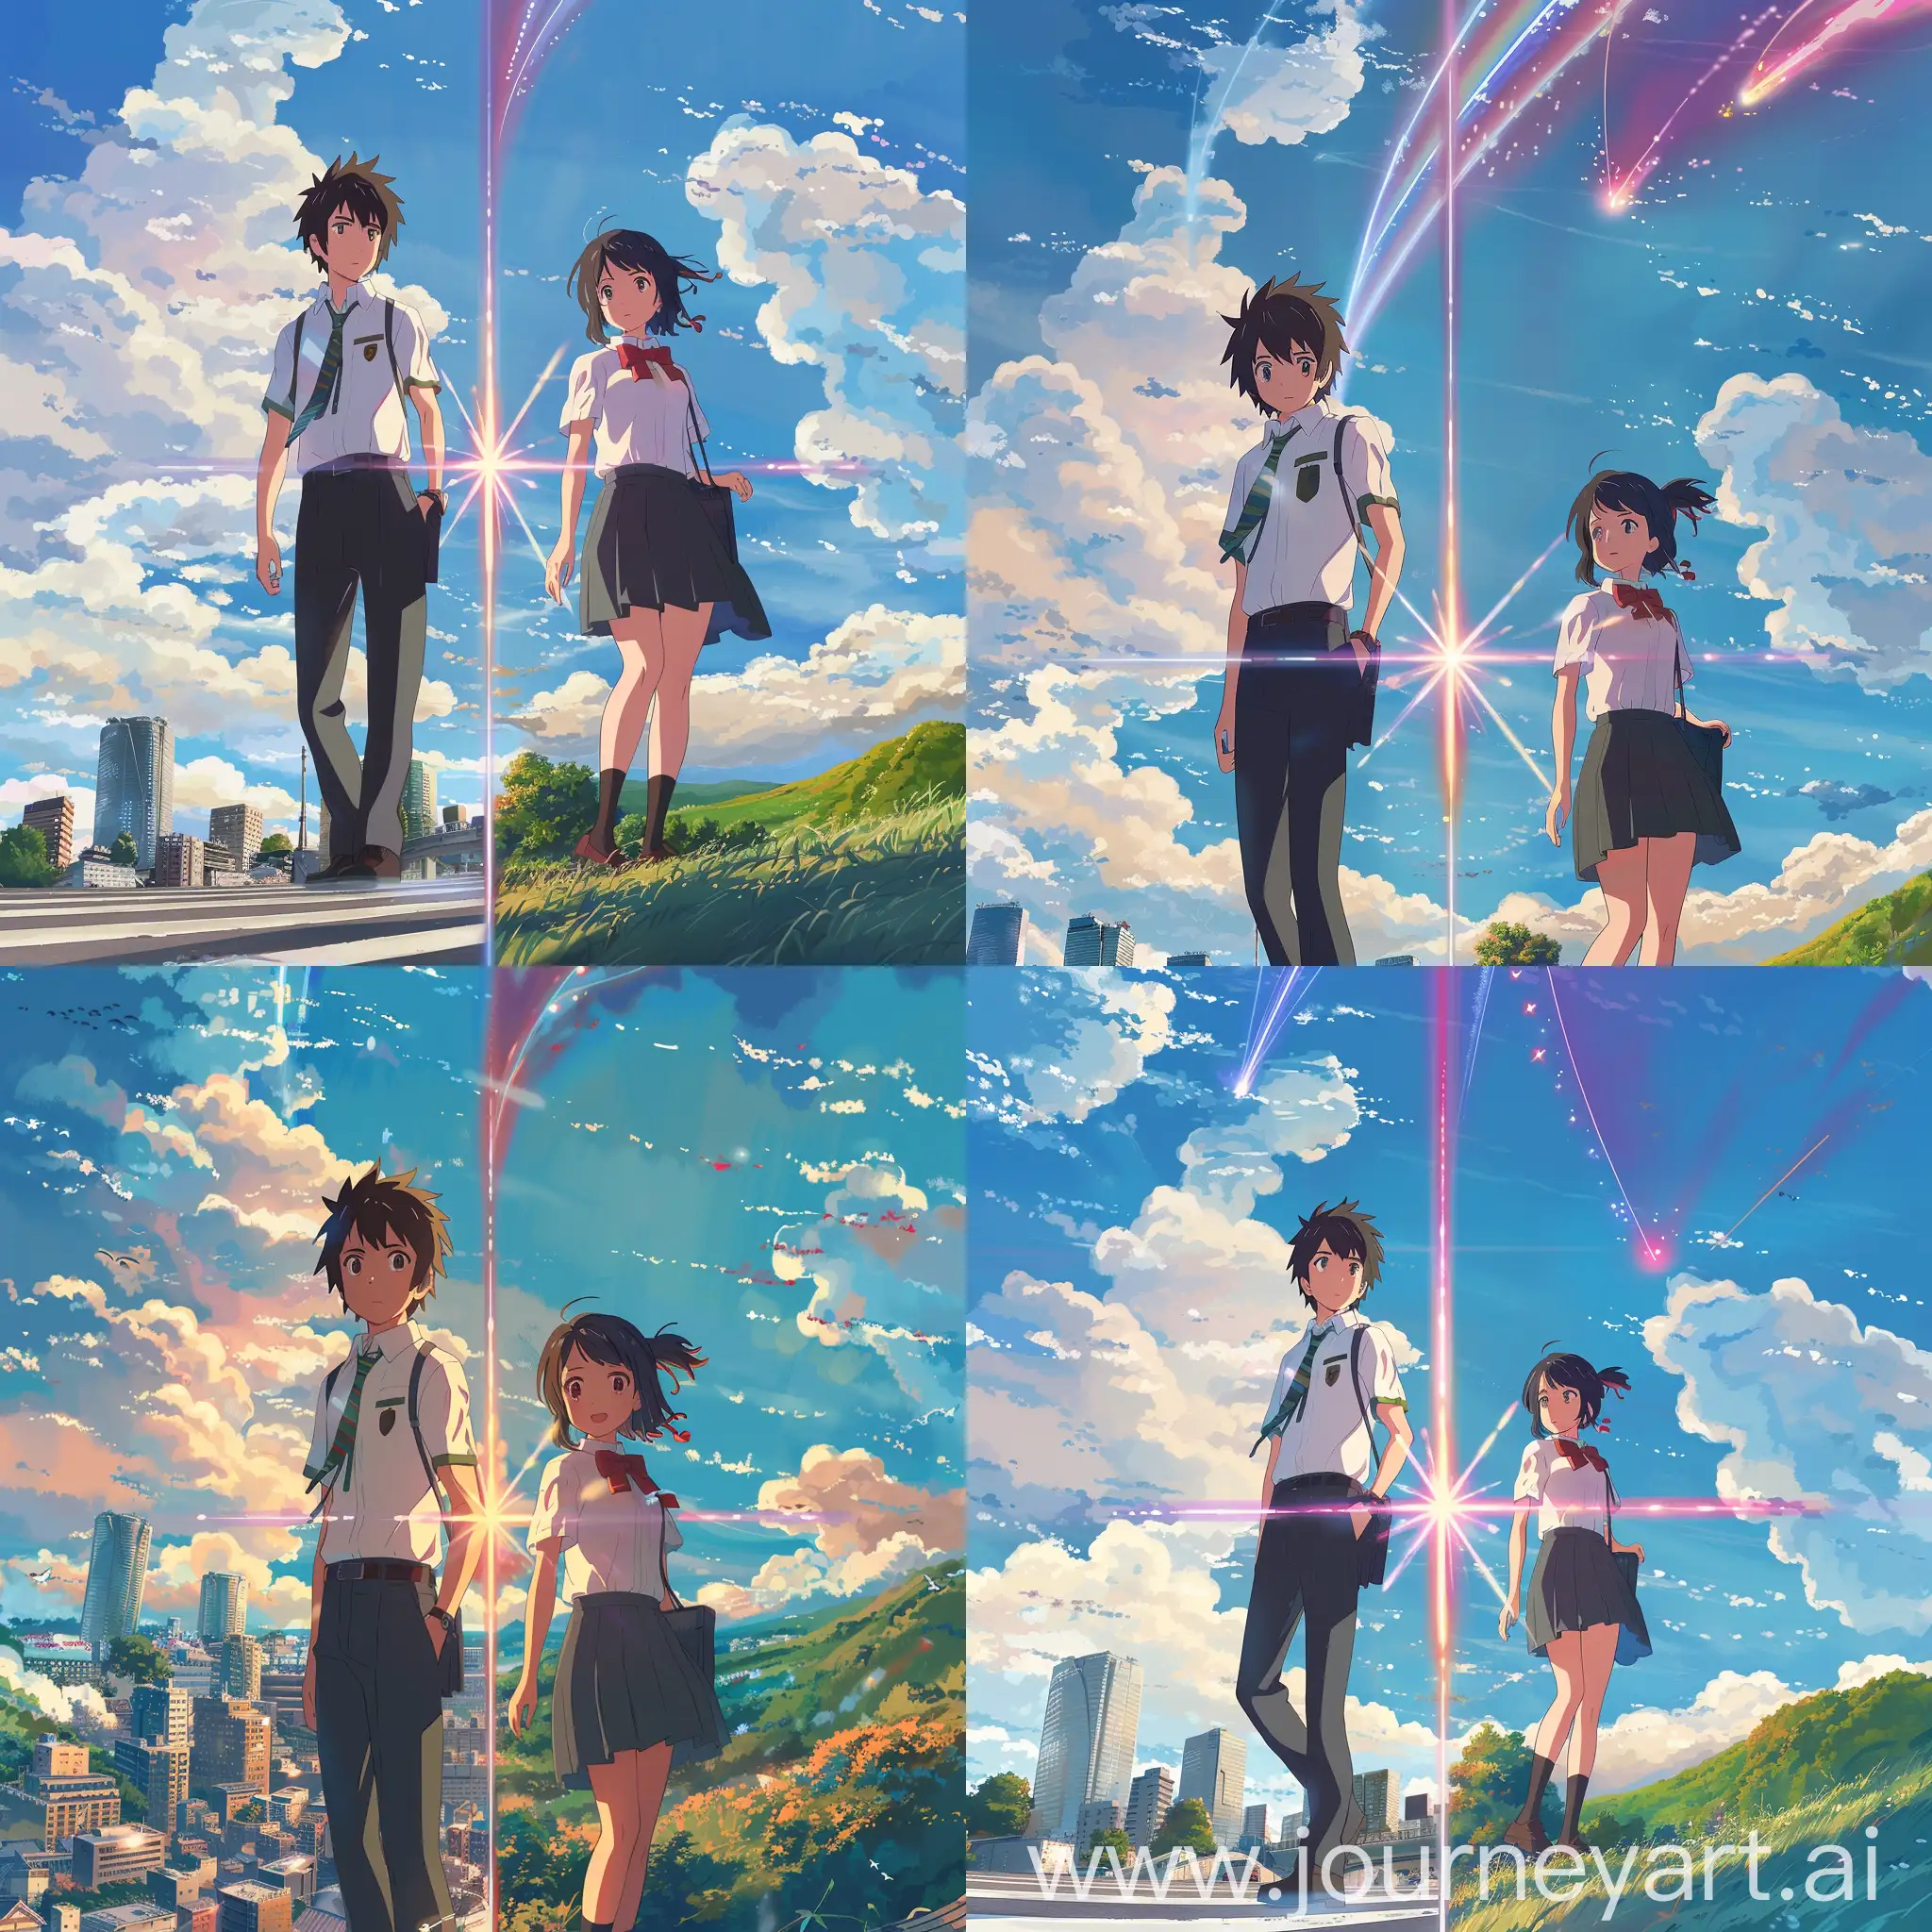 Romantic-Anime-Couple-Embracing-in-Twilight-Scenery